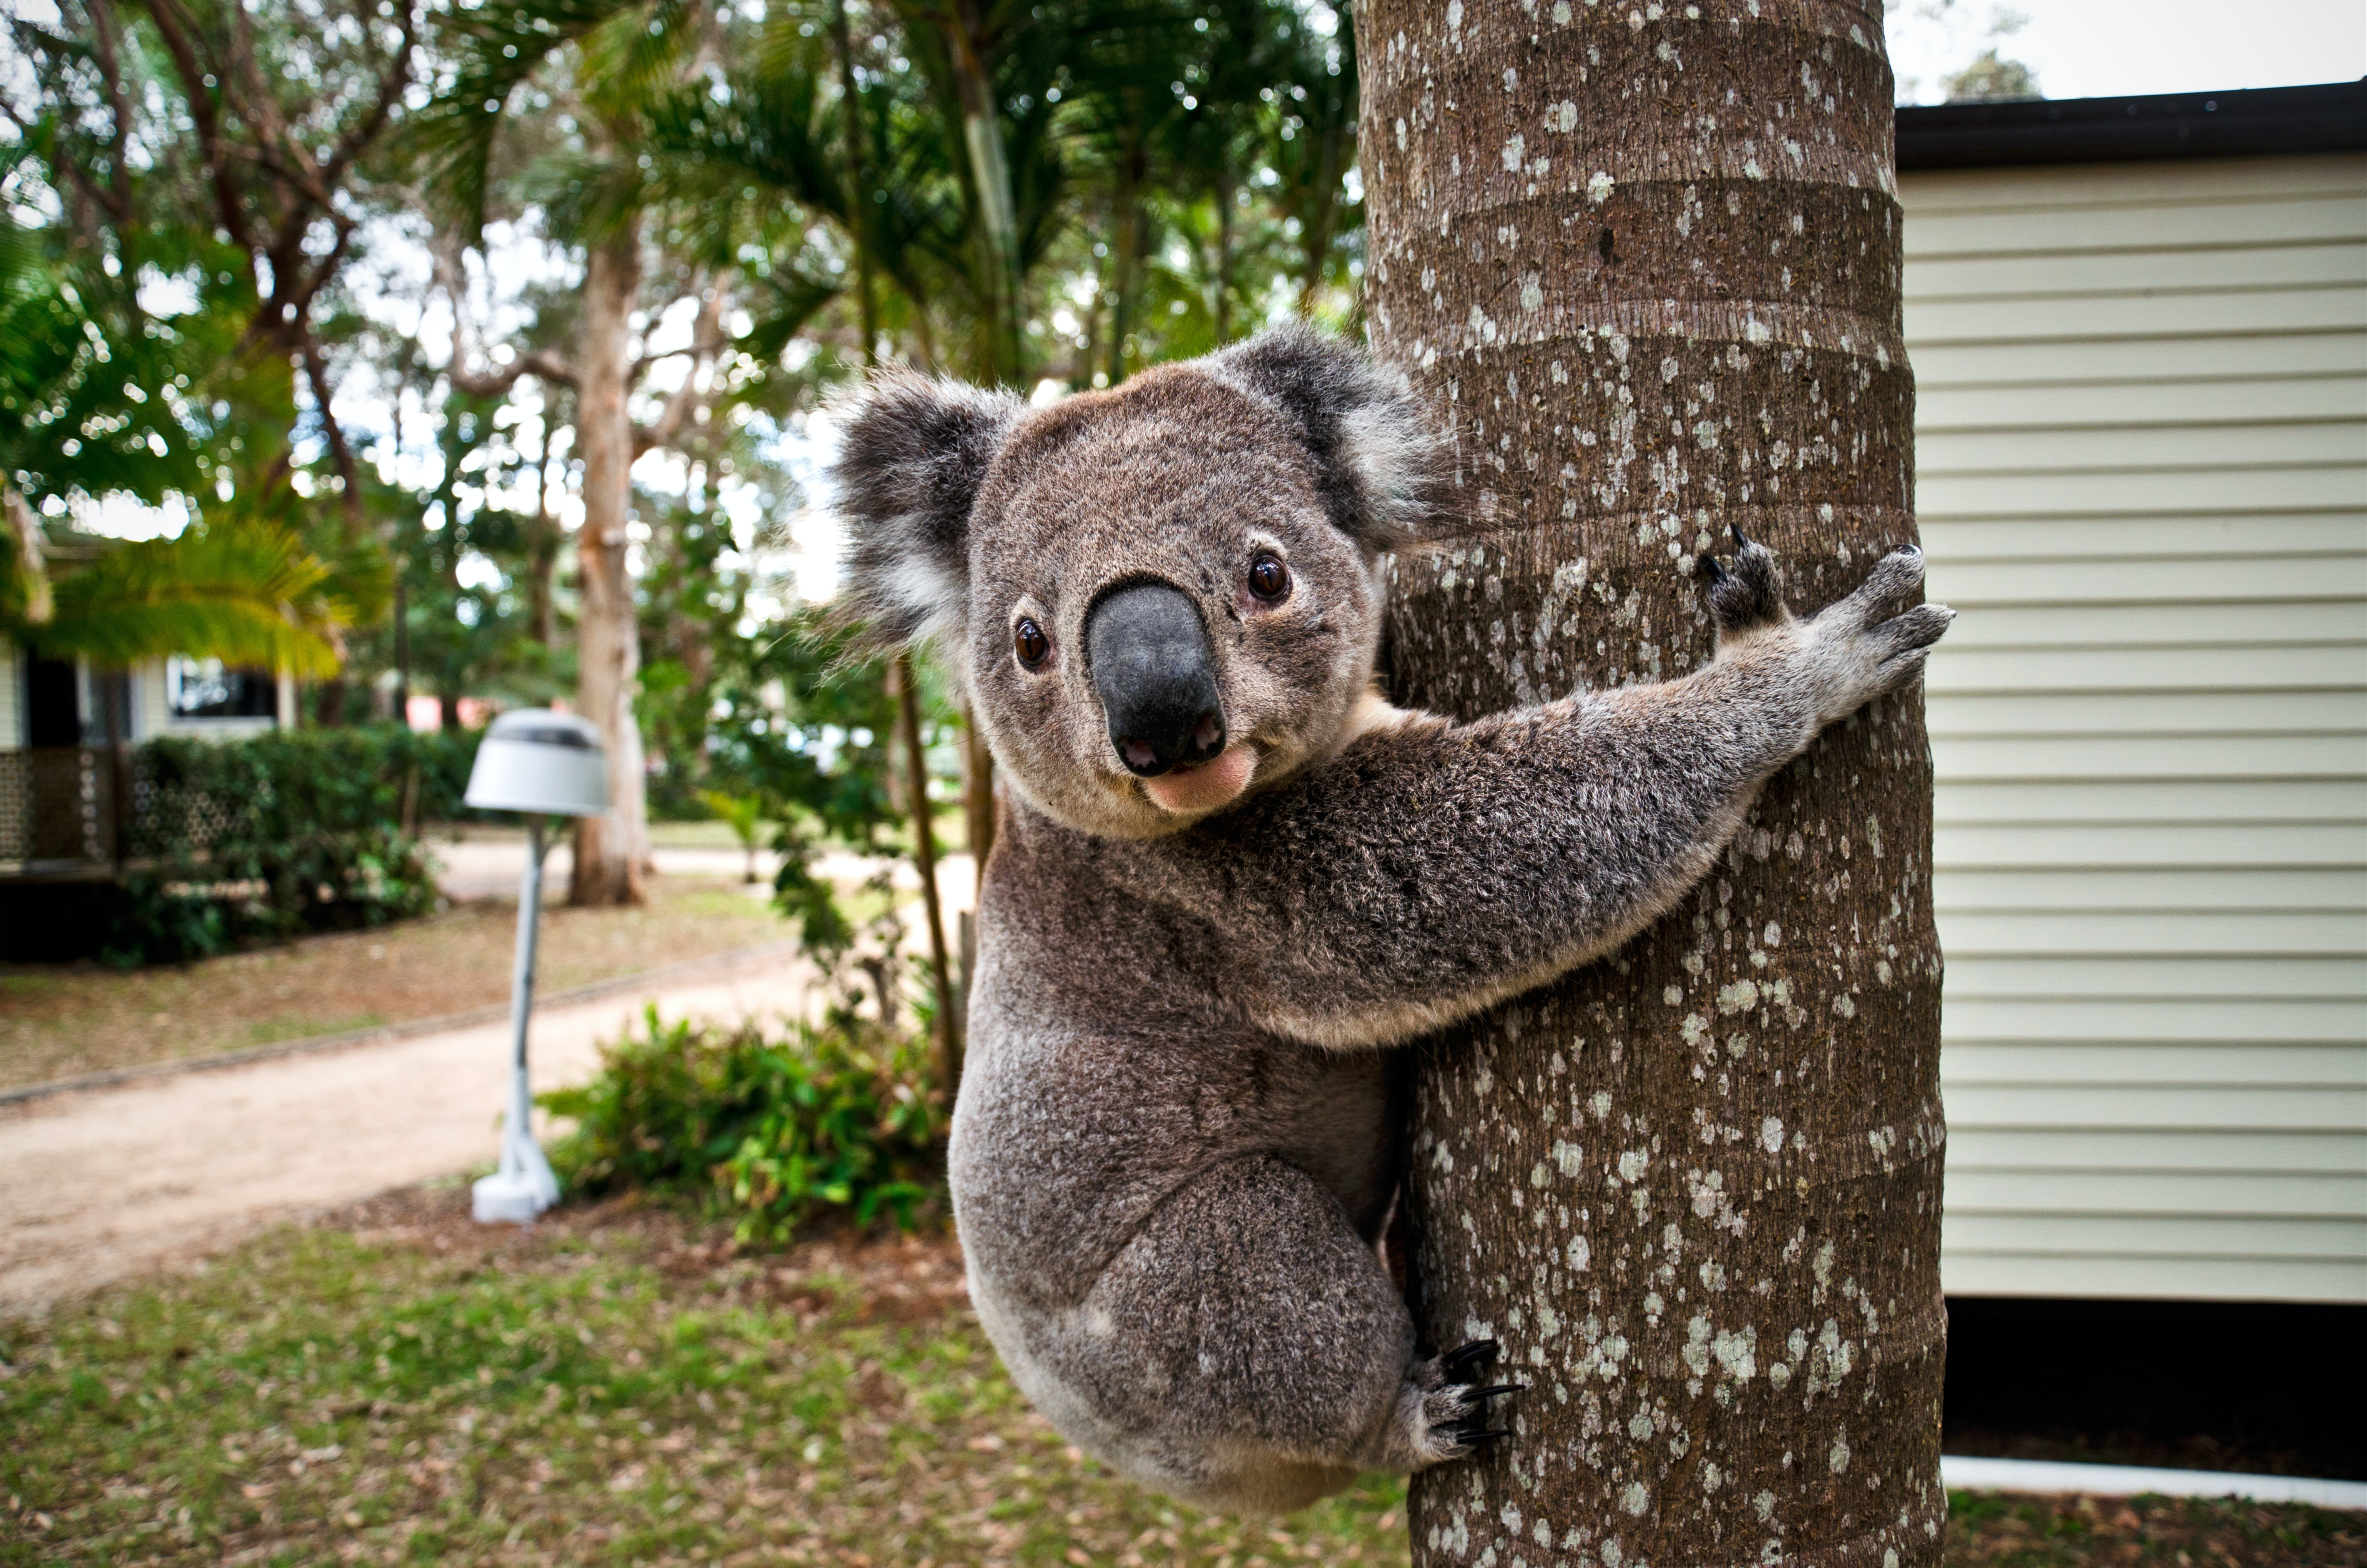 Koala clings to eucalyptus tree